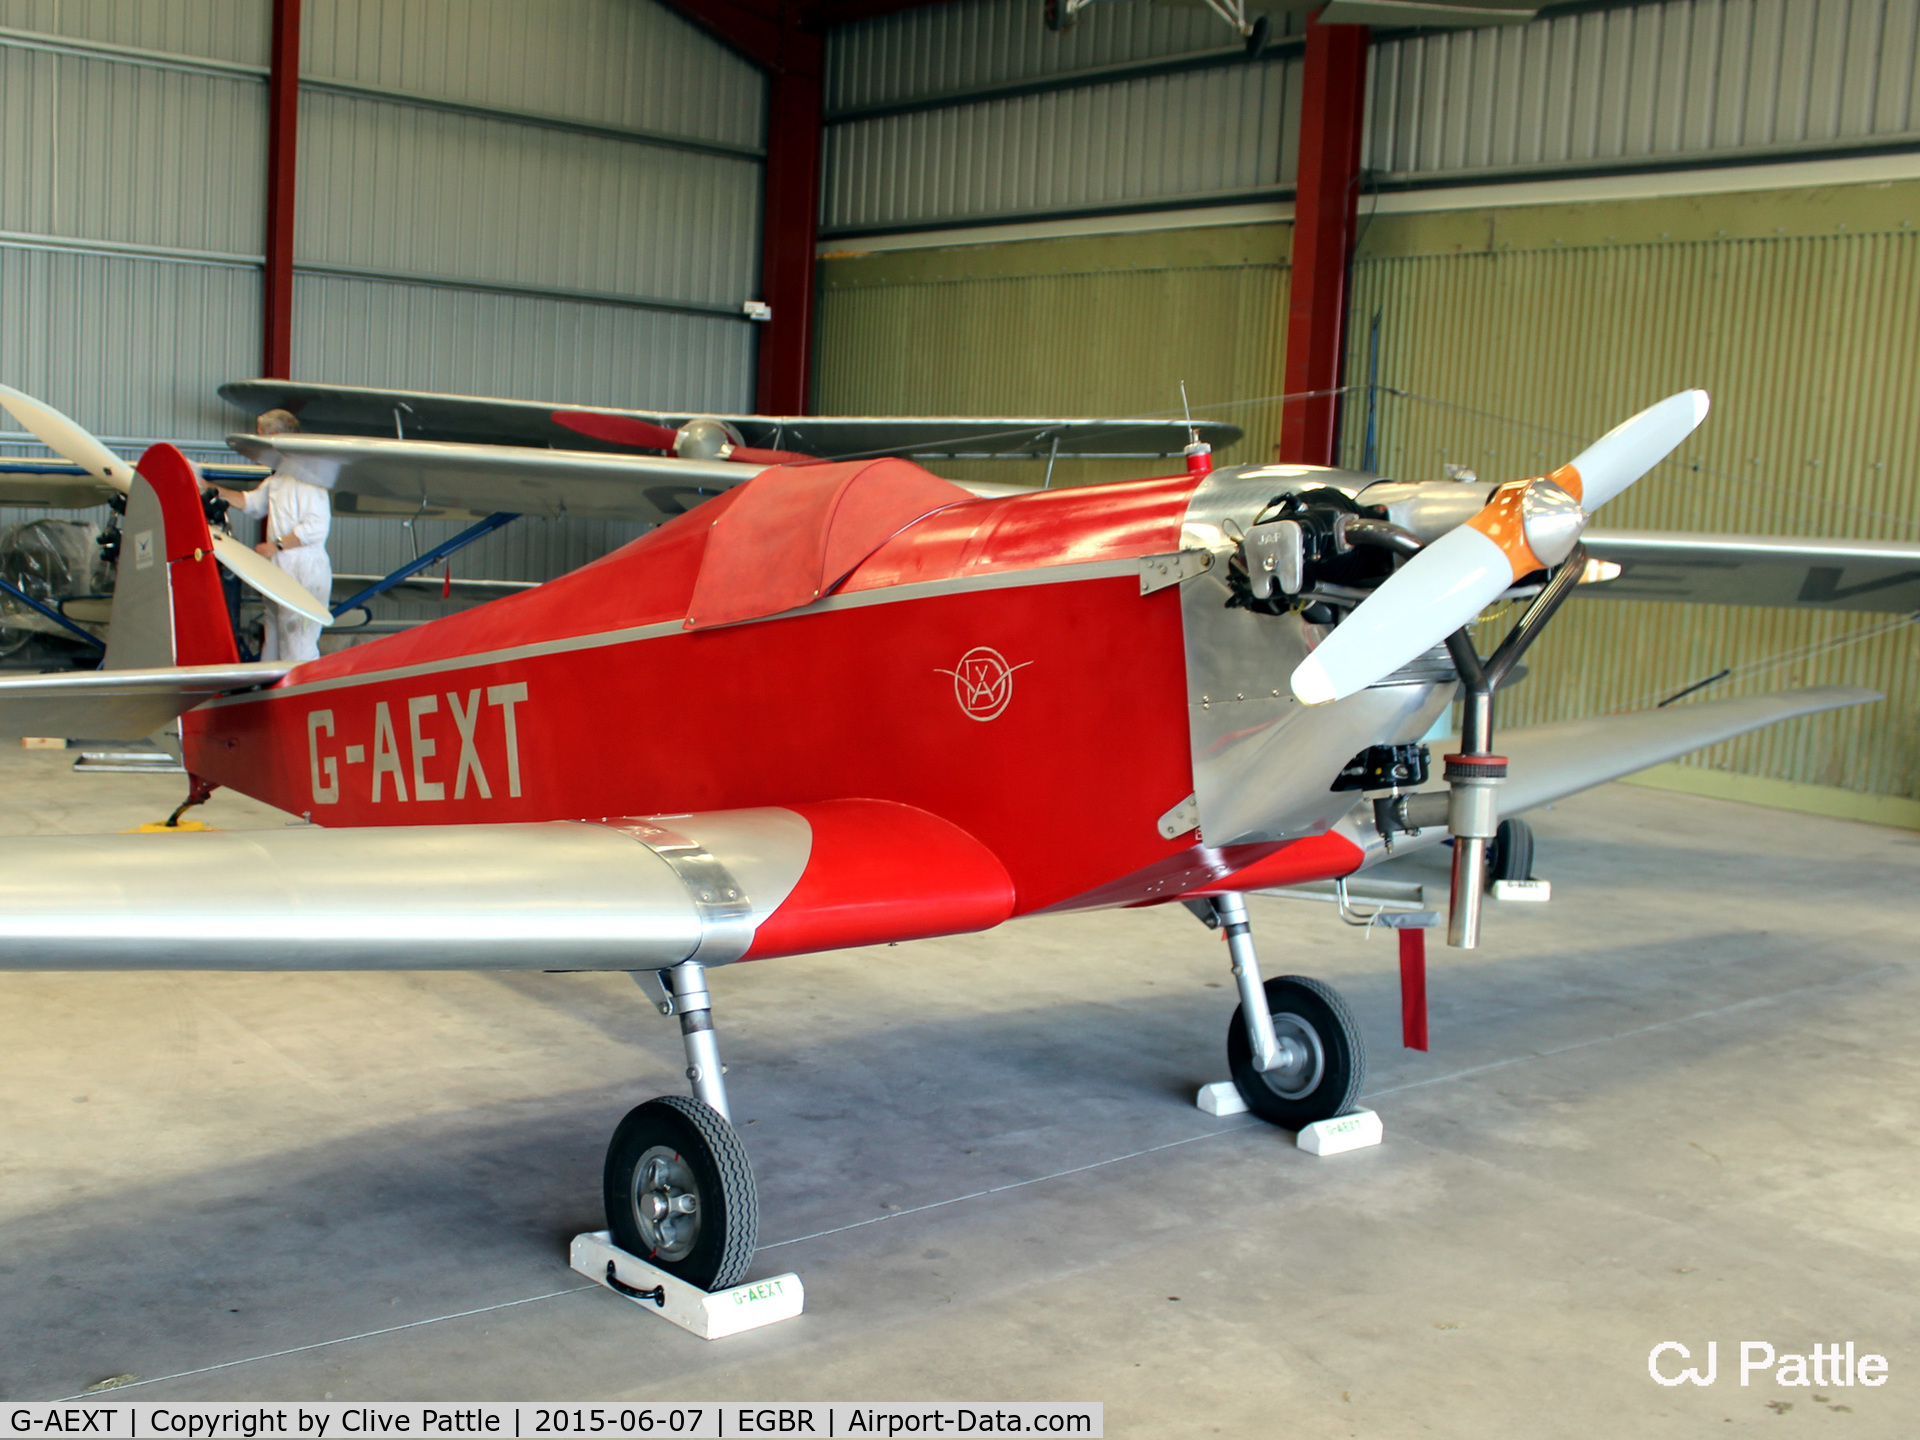 G-AEXT, 1937 Dart Kitten II C/N 123, Hangared at The Real Aeroplane Company Ltd, Breighton Airfield, Yorkshire, U.K.  - EGBR